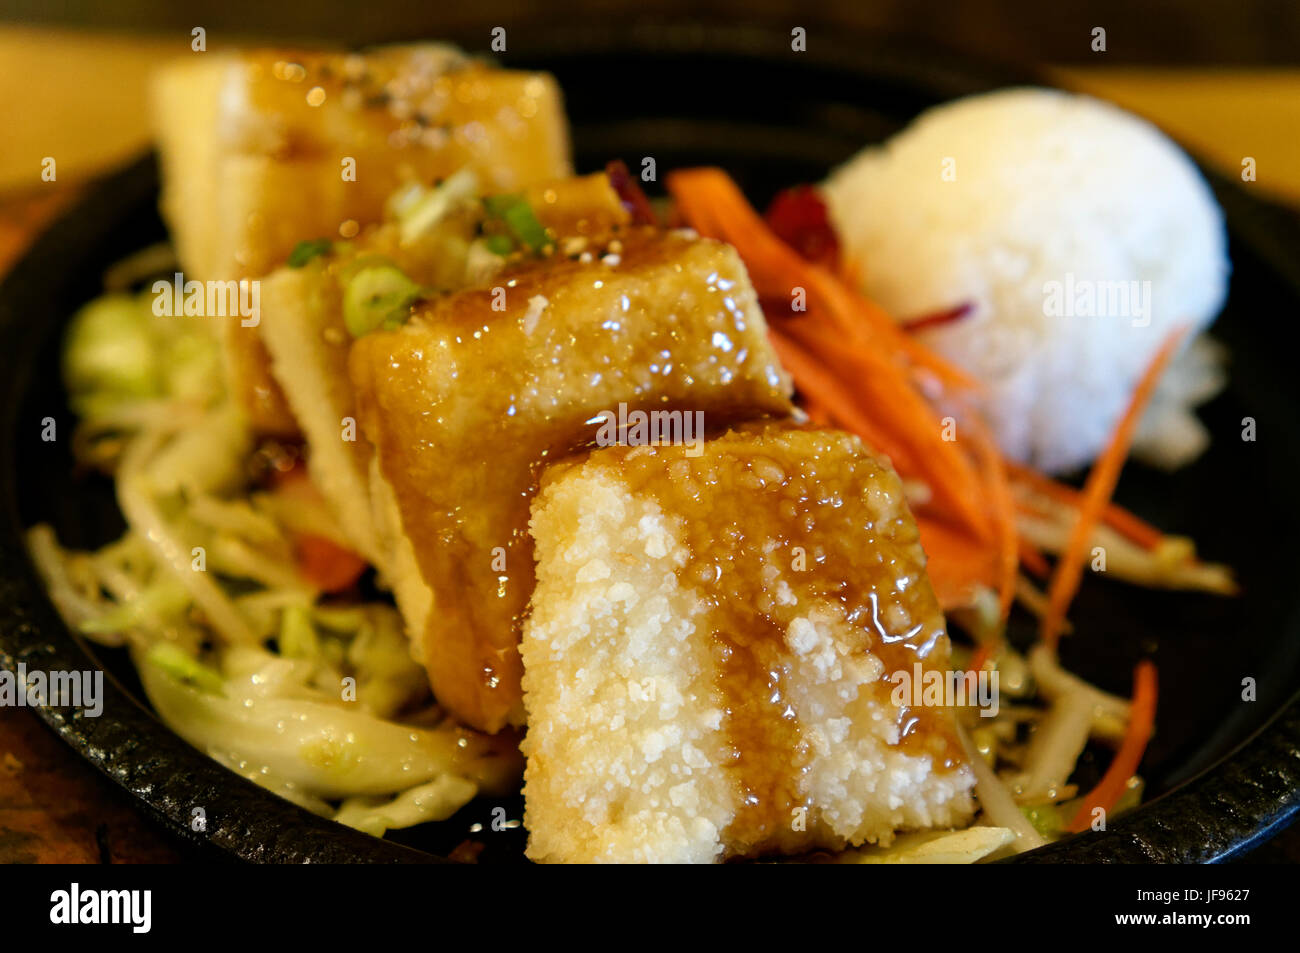 close-up-of-a-dish-of-japanese-tofu-teri